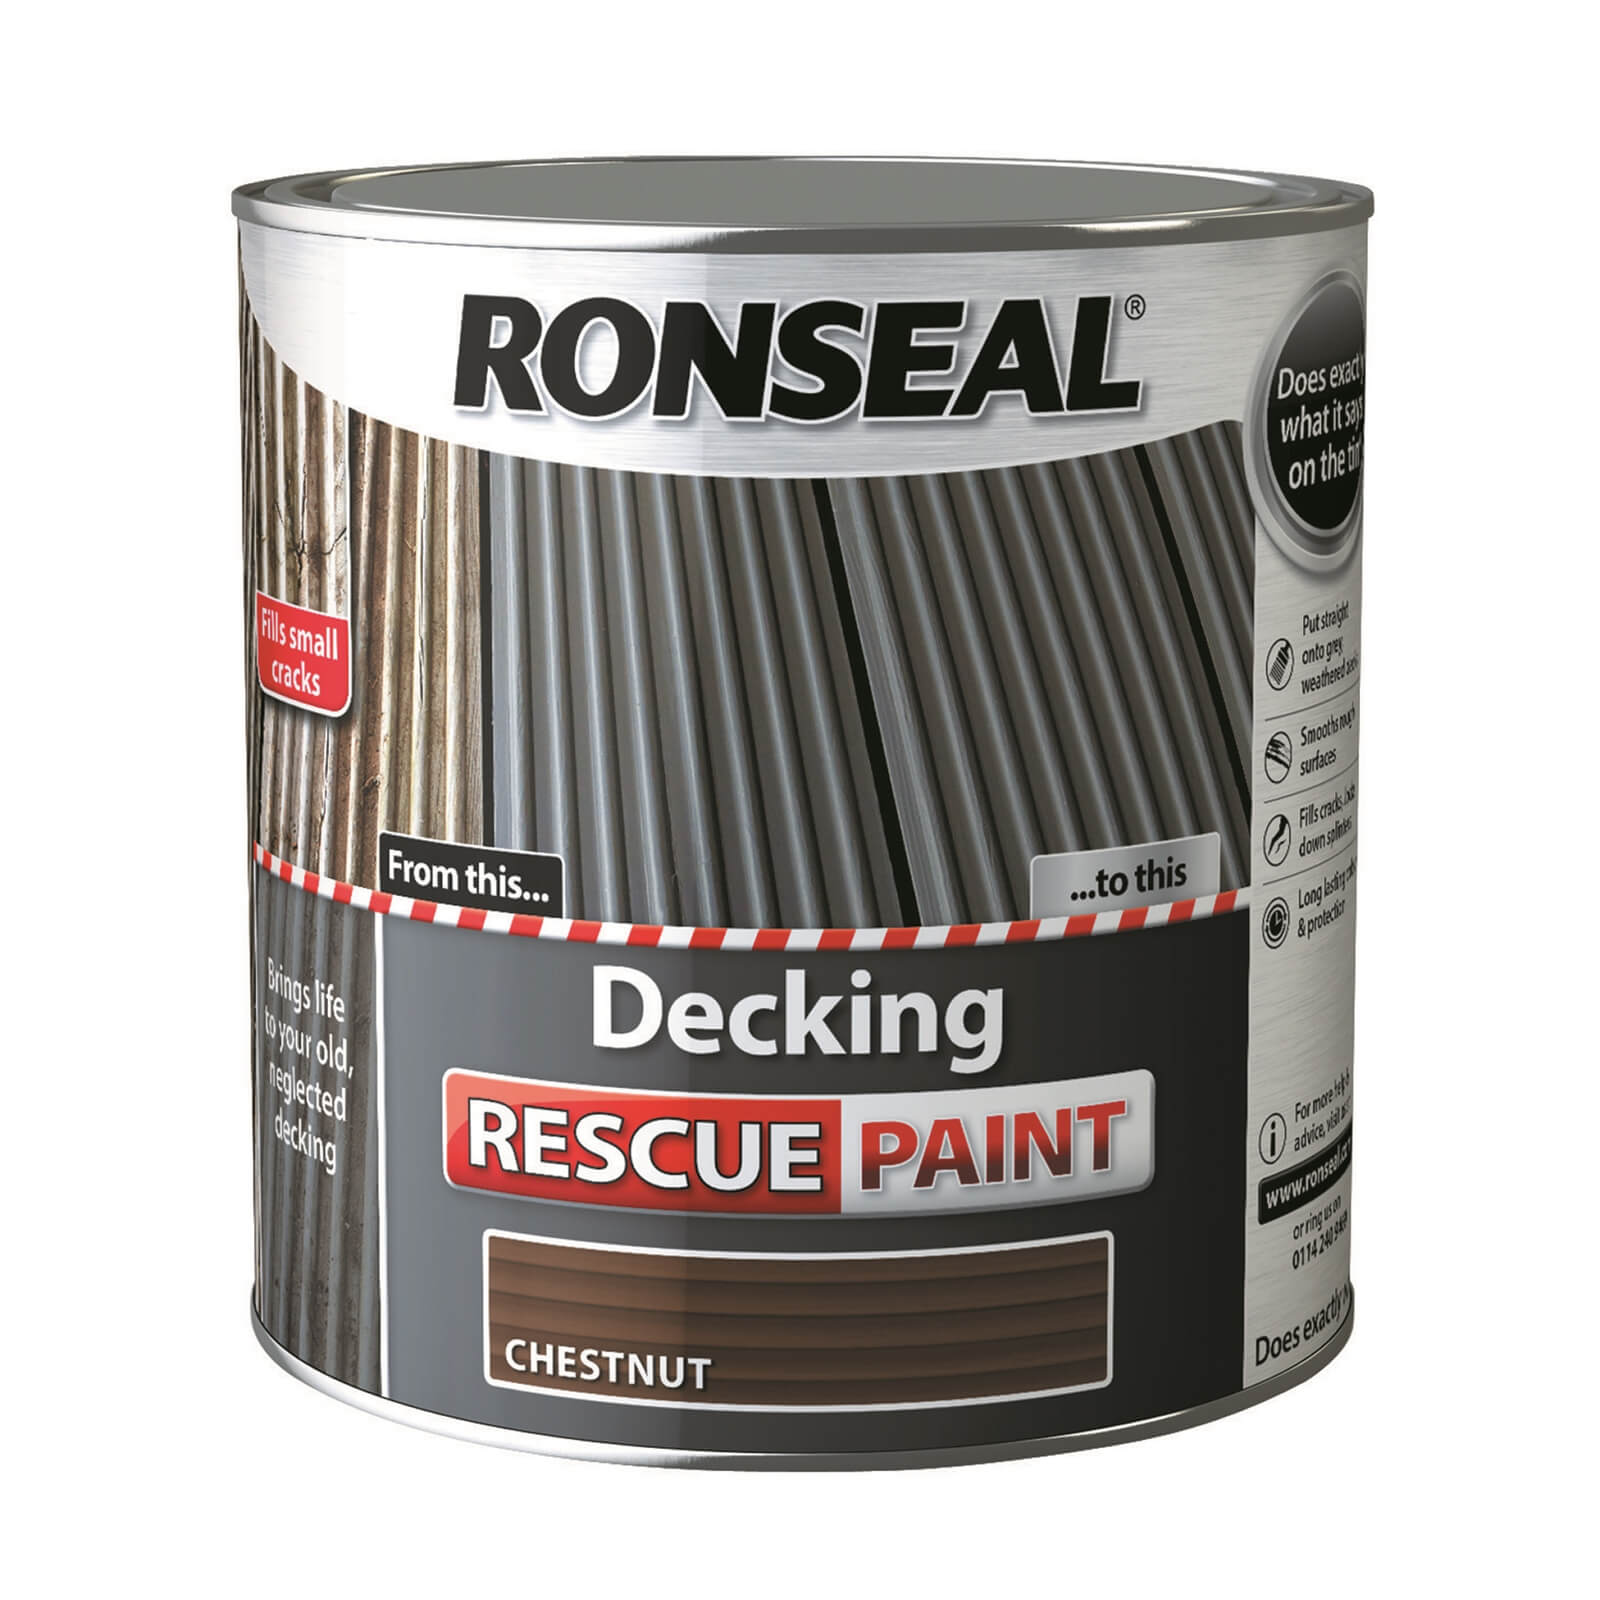 Ronseal Decking Rescue Paint Chestnut - 2.5L